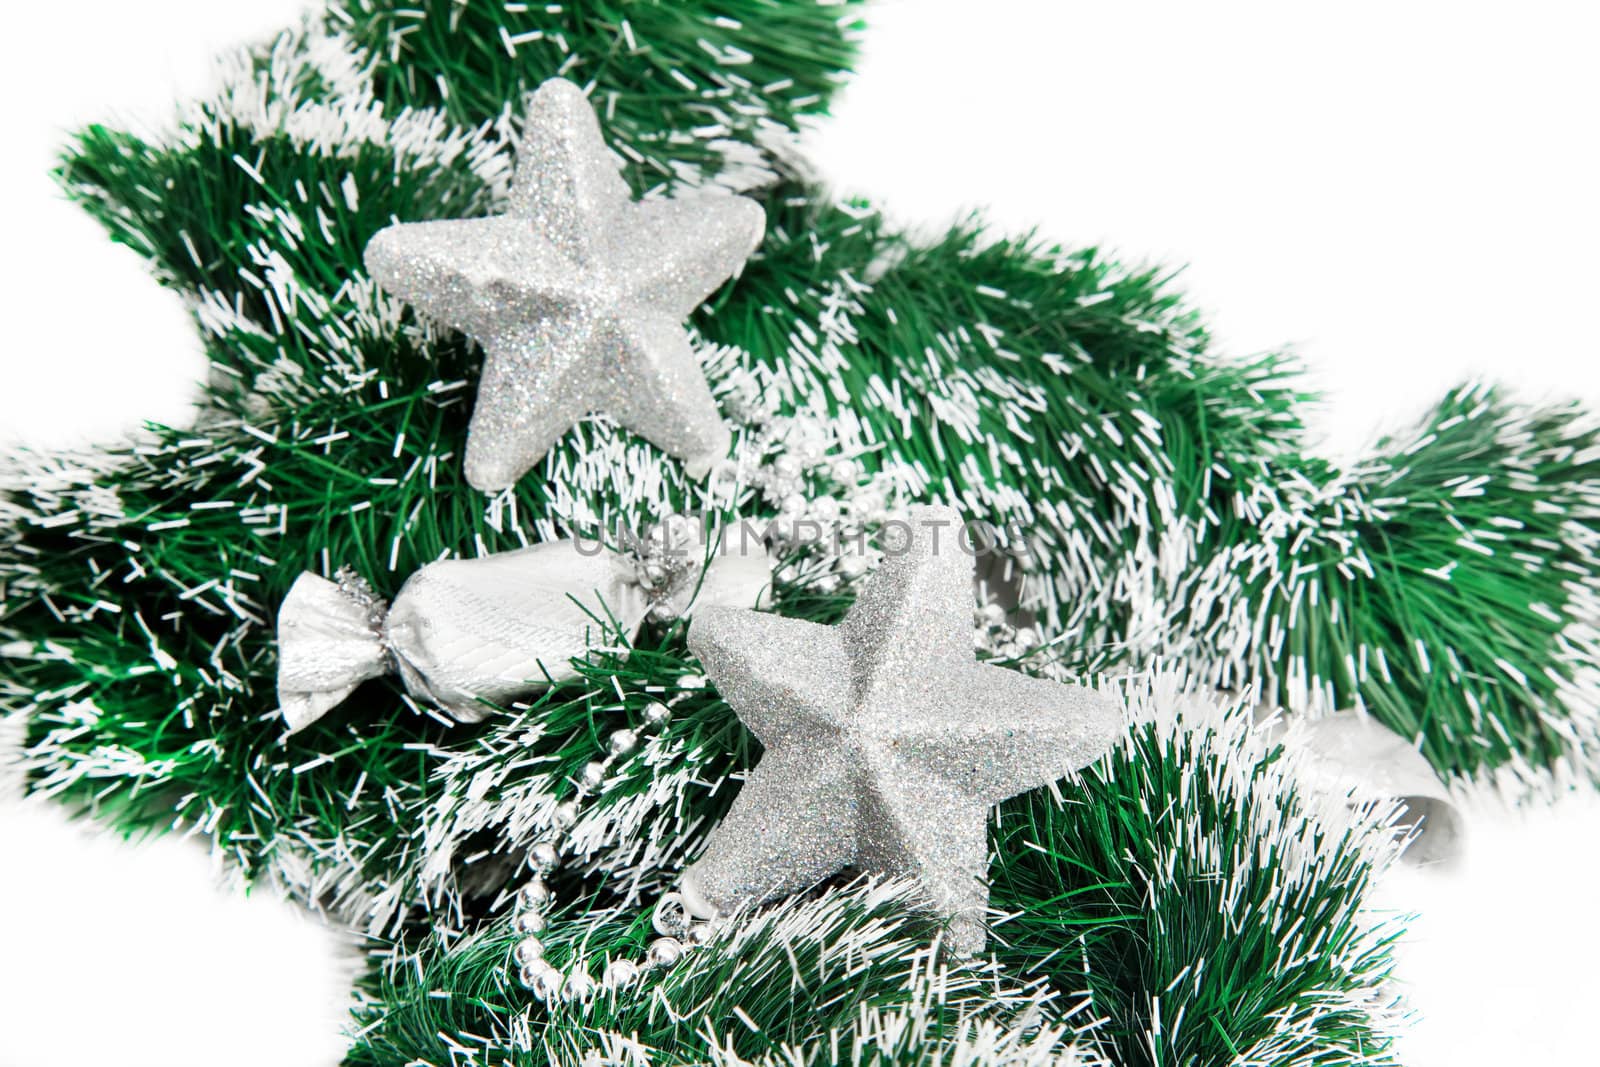 Christmas shiny stars on green tinsel by RawGroup